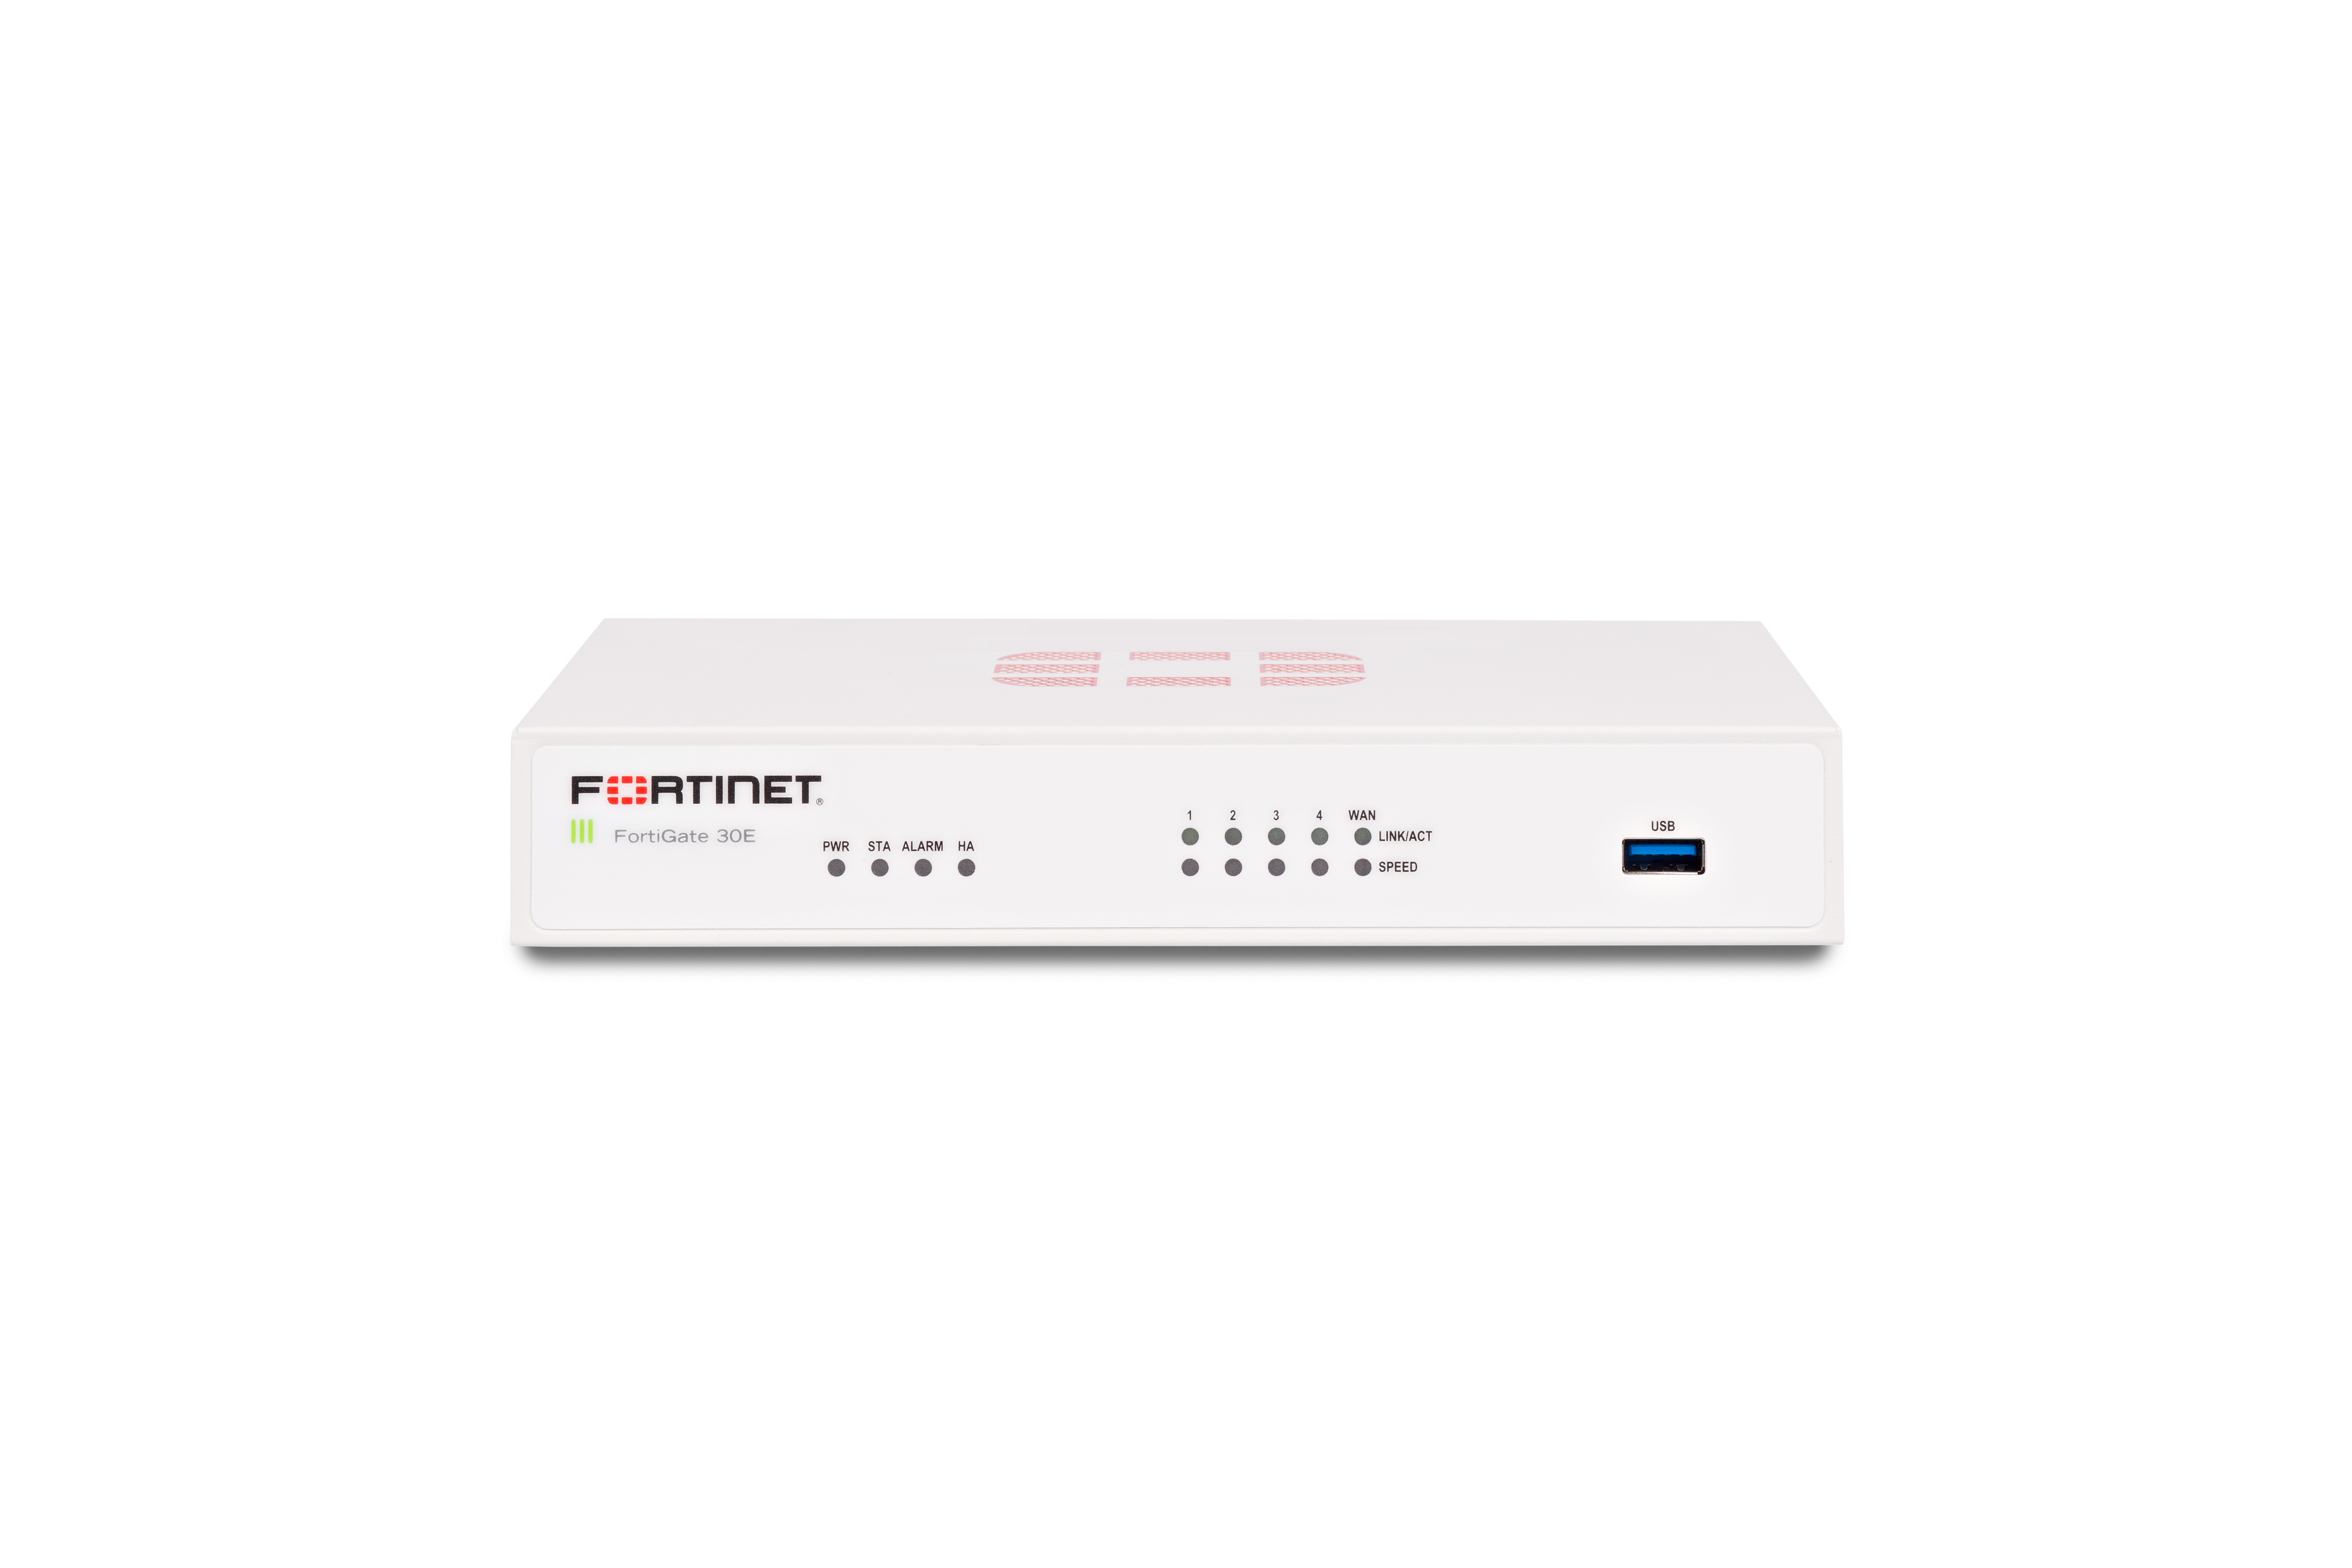 Fortinet FG-30E Next-Generation Firewall – 5 Port Gigabit Ethernet